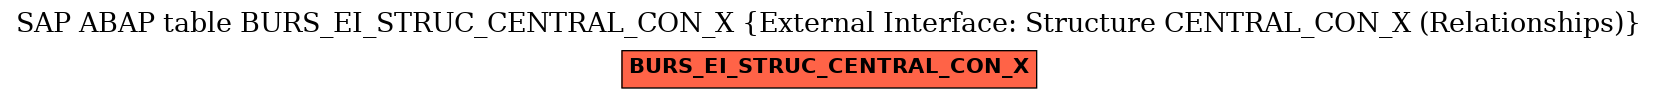 E-R Diagram for table BURS_EI_STRUC_CENTRAL_CON_X (External Interface: Structure CENTRAL_CON_X (Relationships))